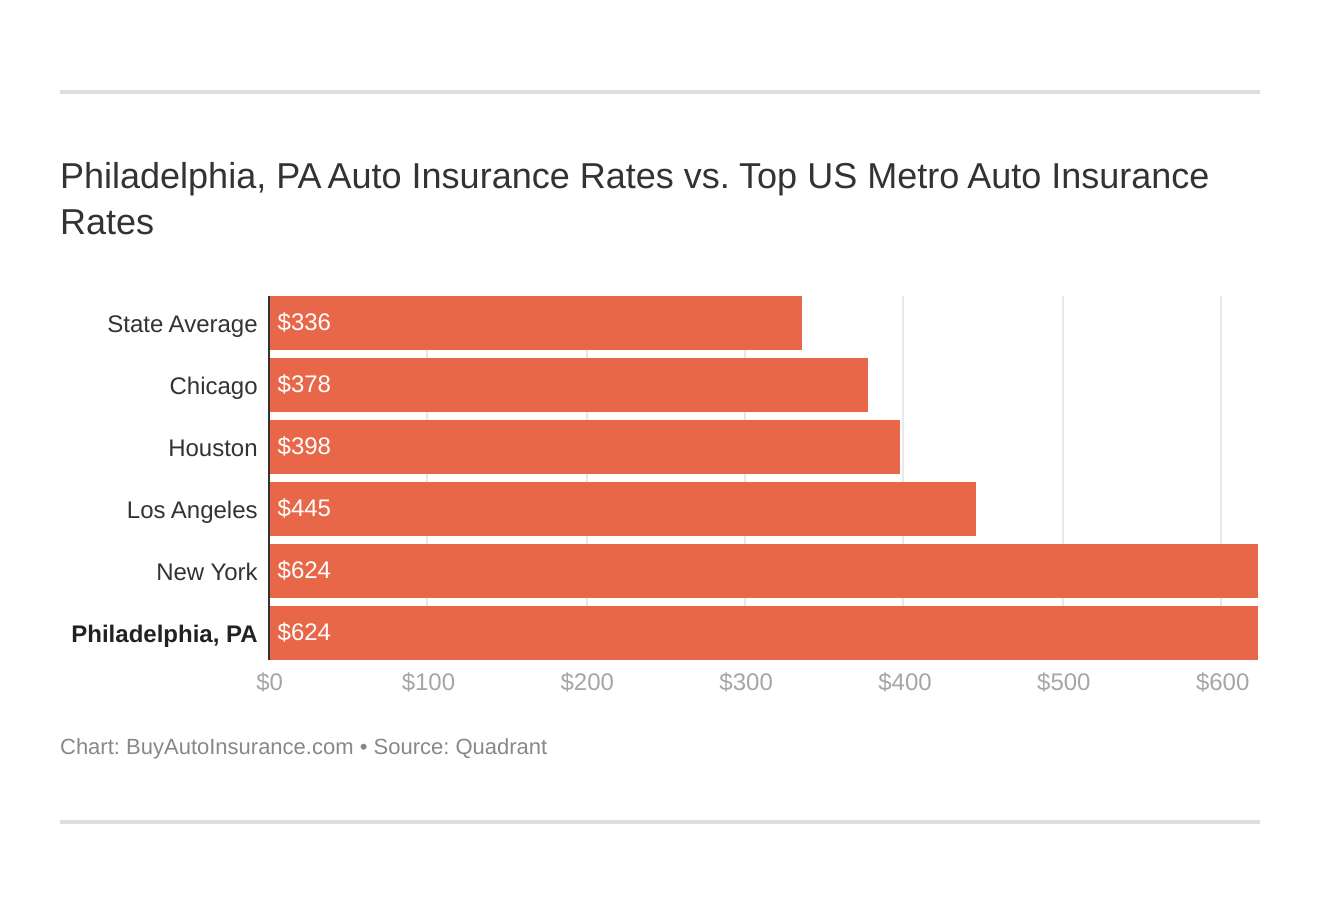 Philadelphia, PA Auto Insurance Rates vs. Top US Metro Auto Insurance Rates